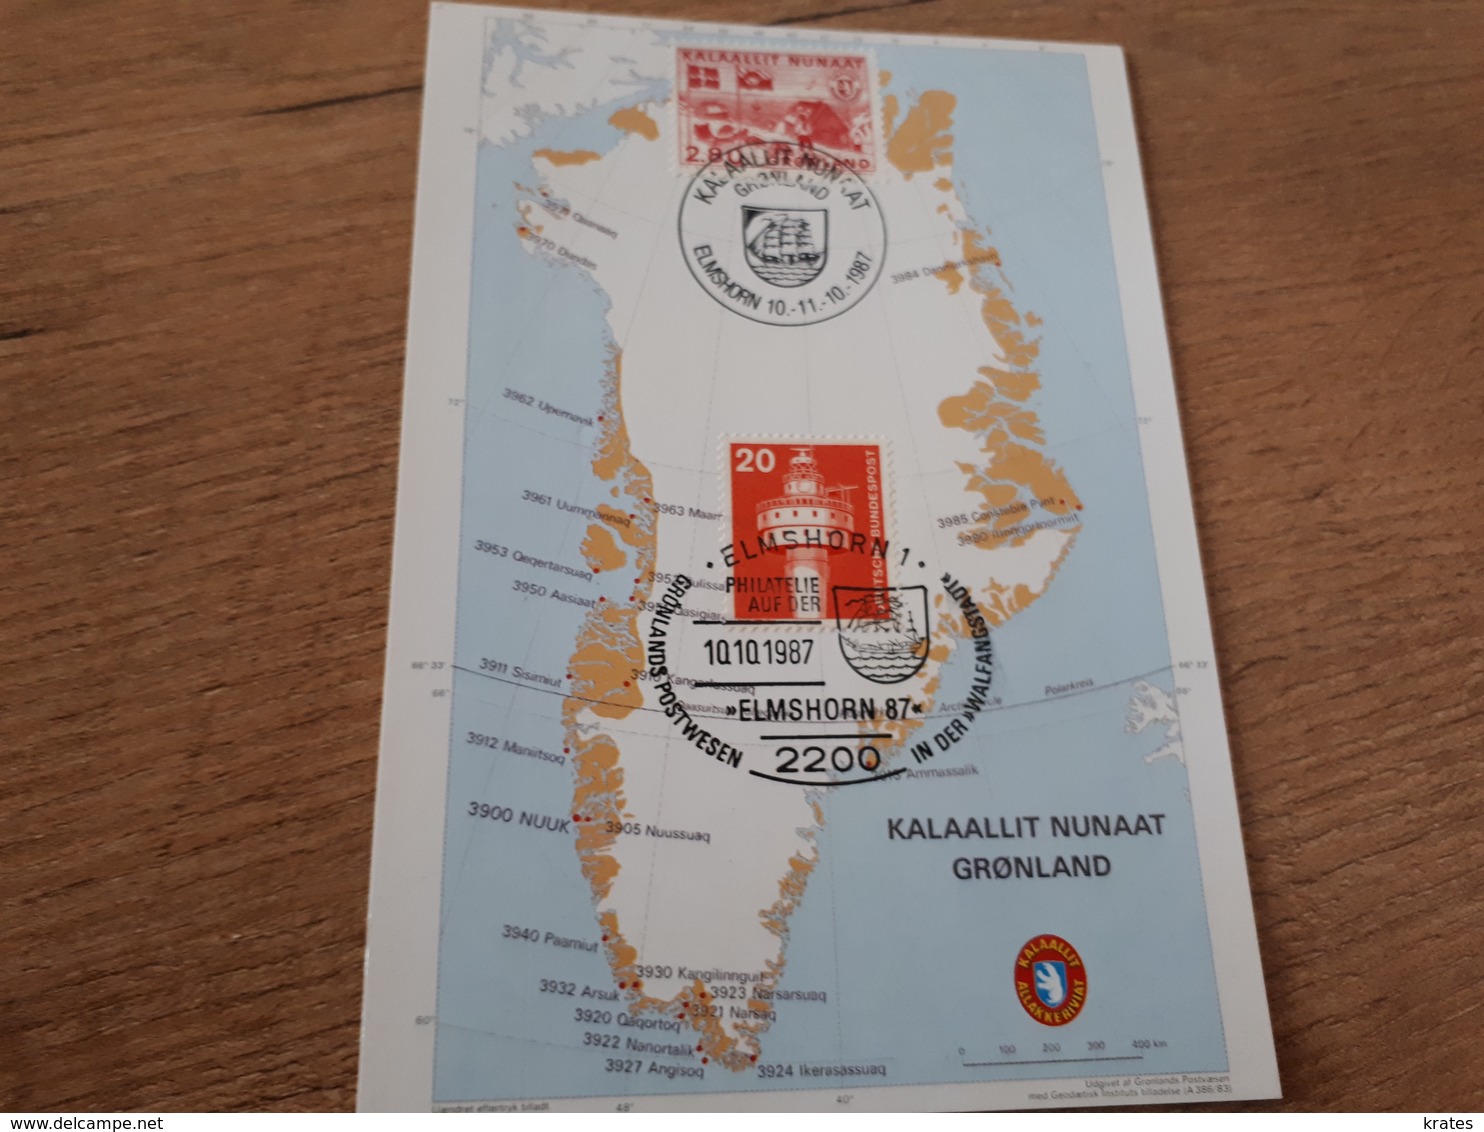 Postcard - Greenland, Mix Frankature         (V 34621) - Groenland